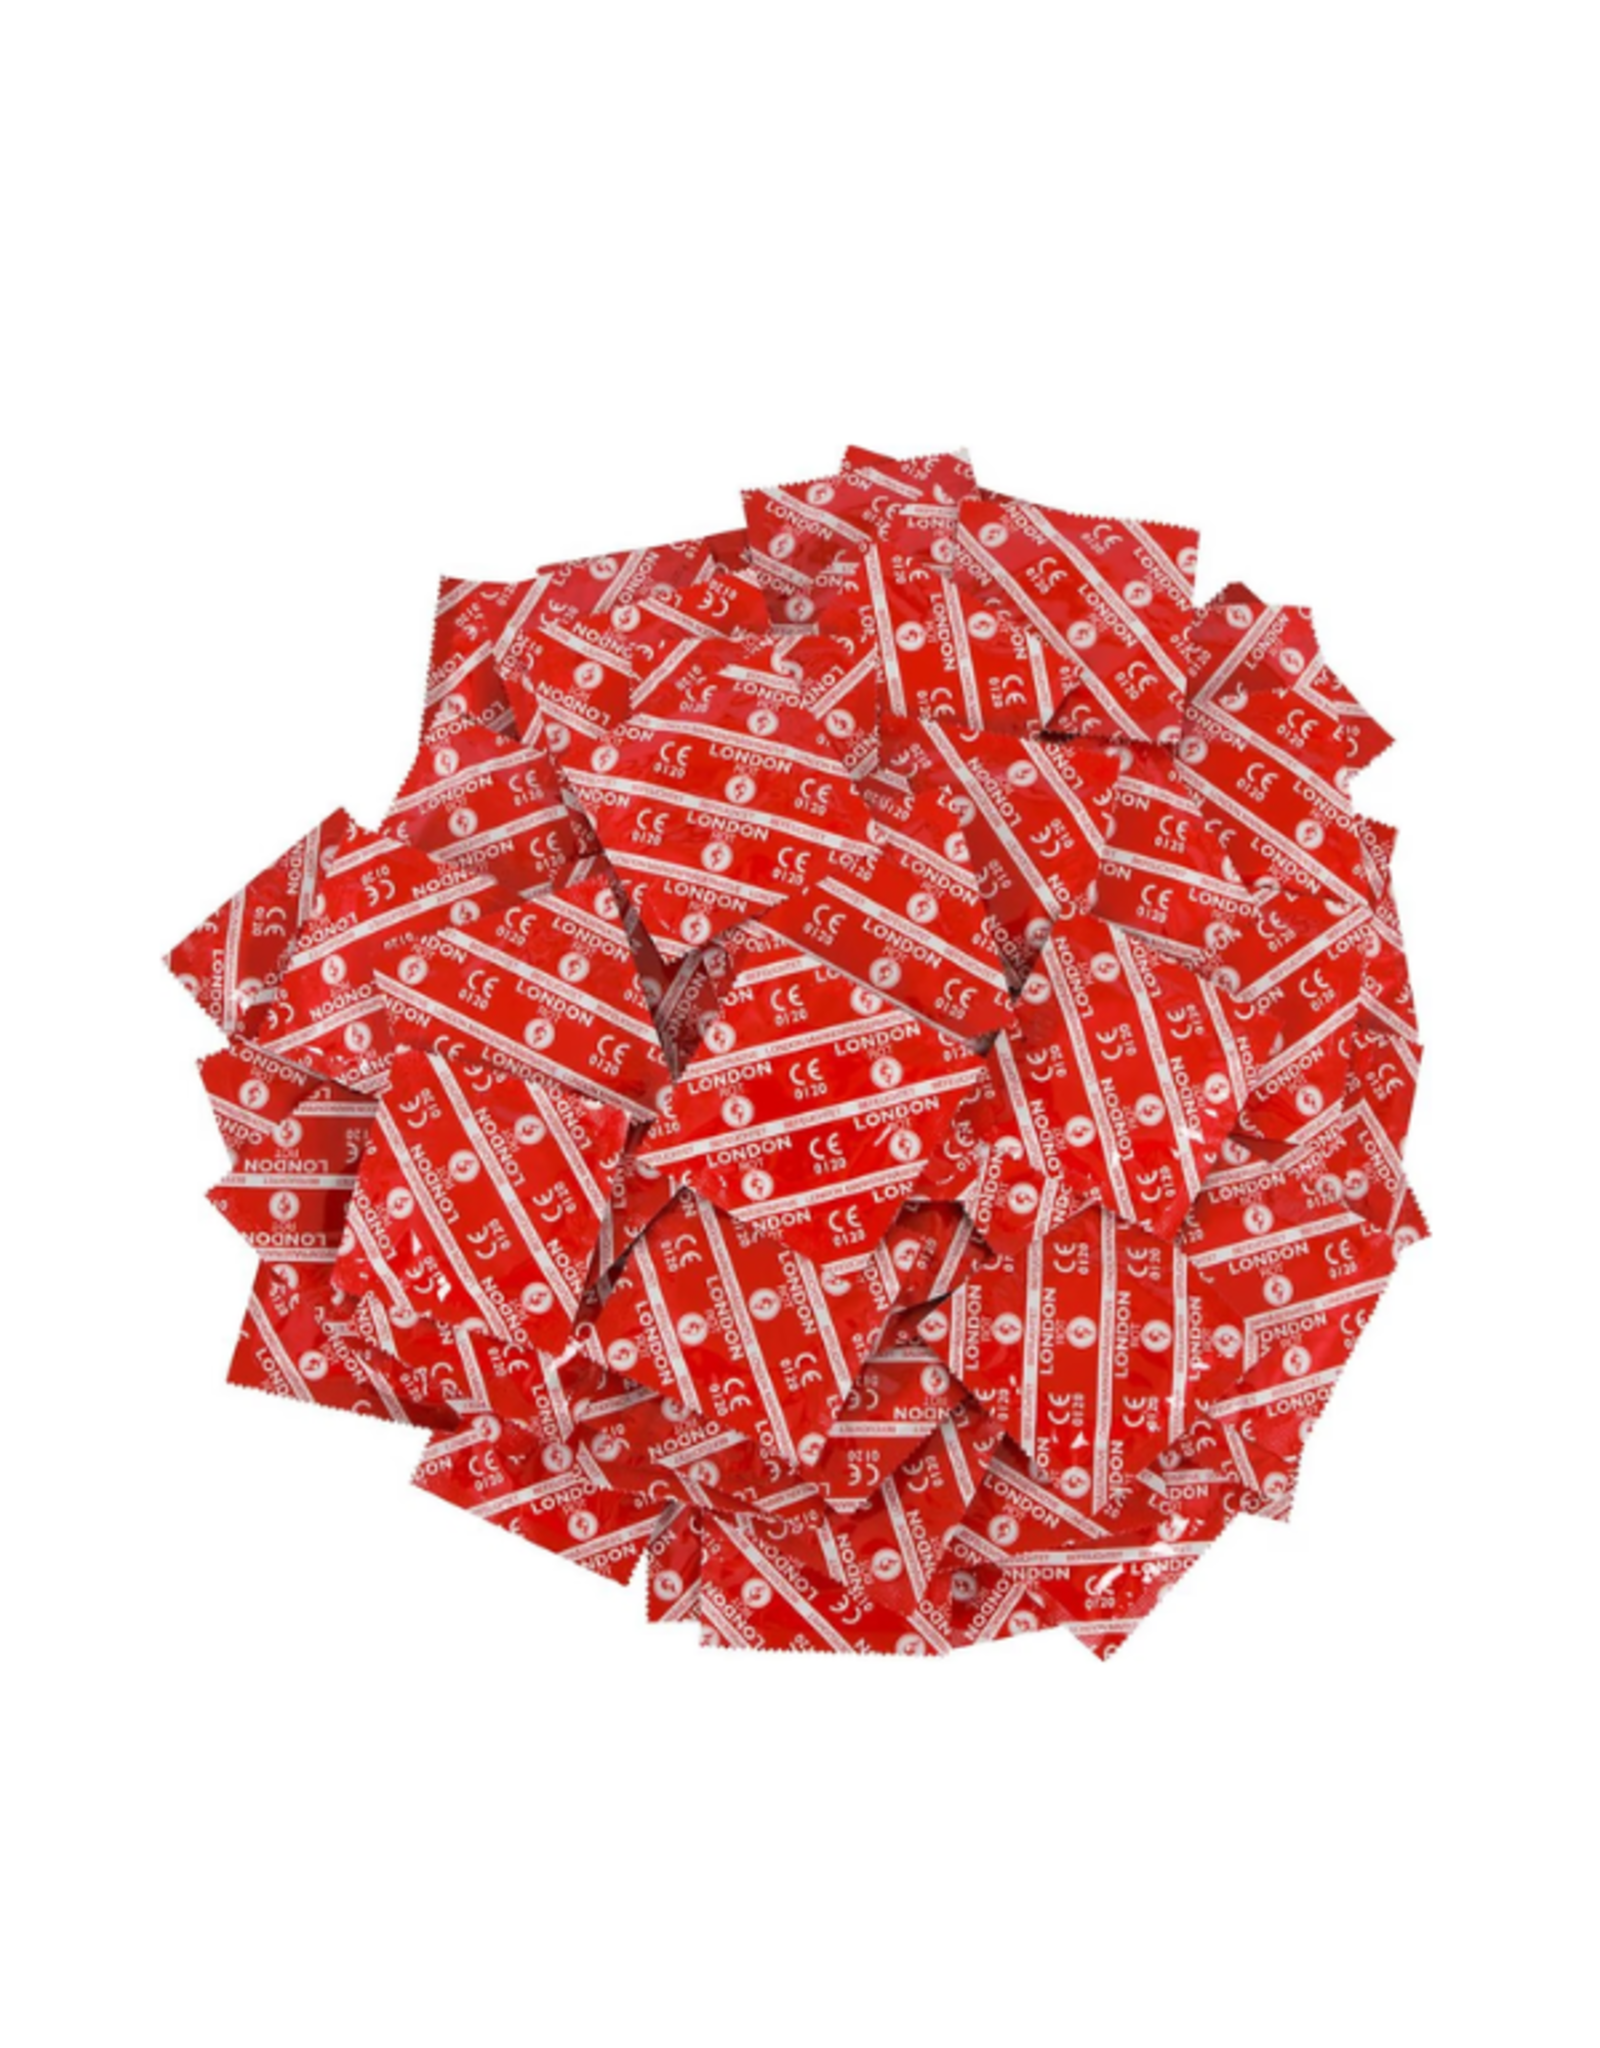 Durex London Kondome Rot mit Erdbeeraroma - 1000 Stück